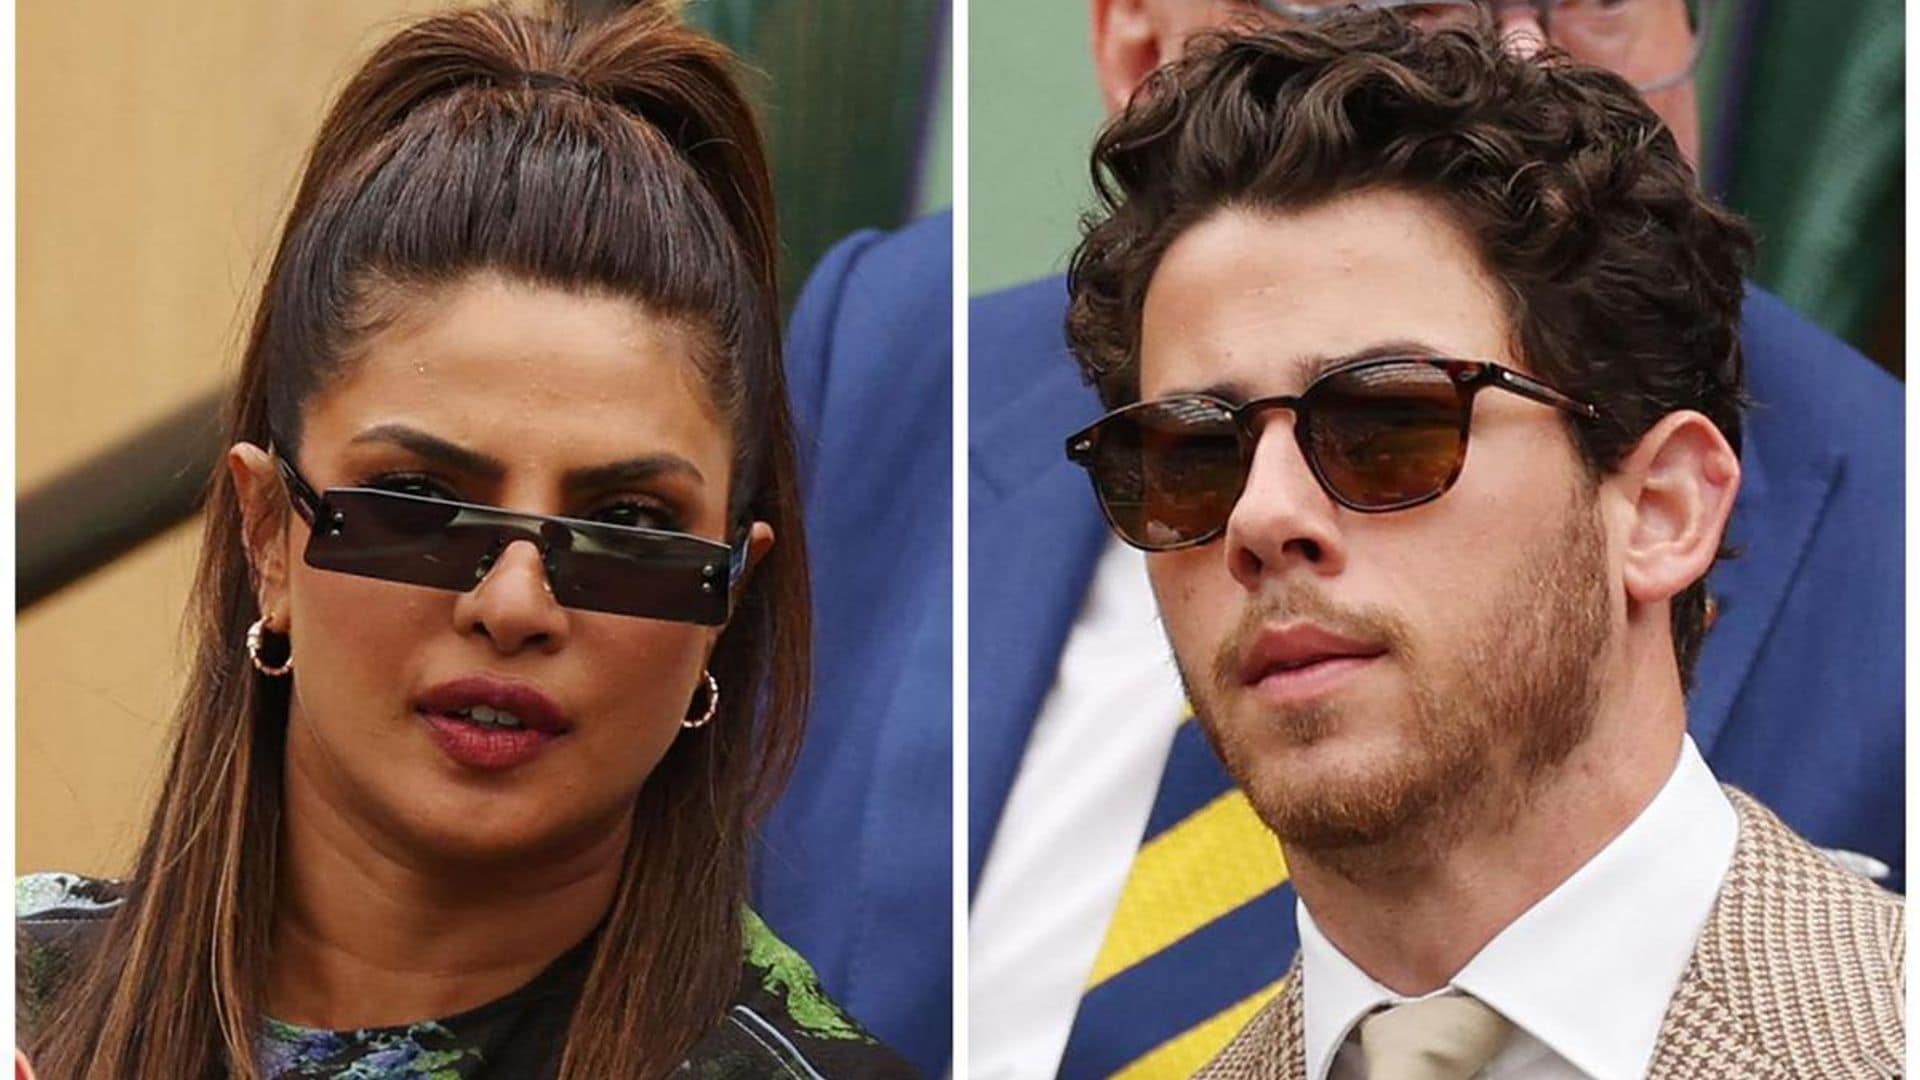 Nick Jonas and Priyanka Chopra were forced to vacate their luxurious California home